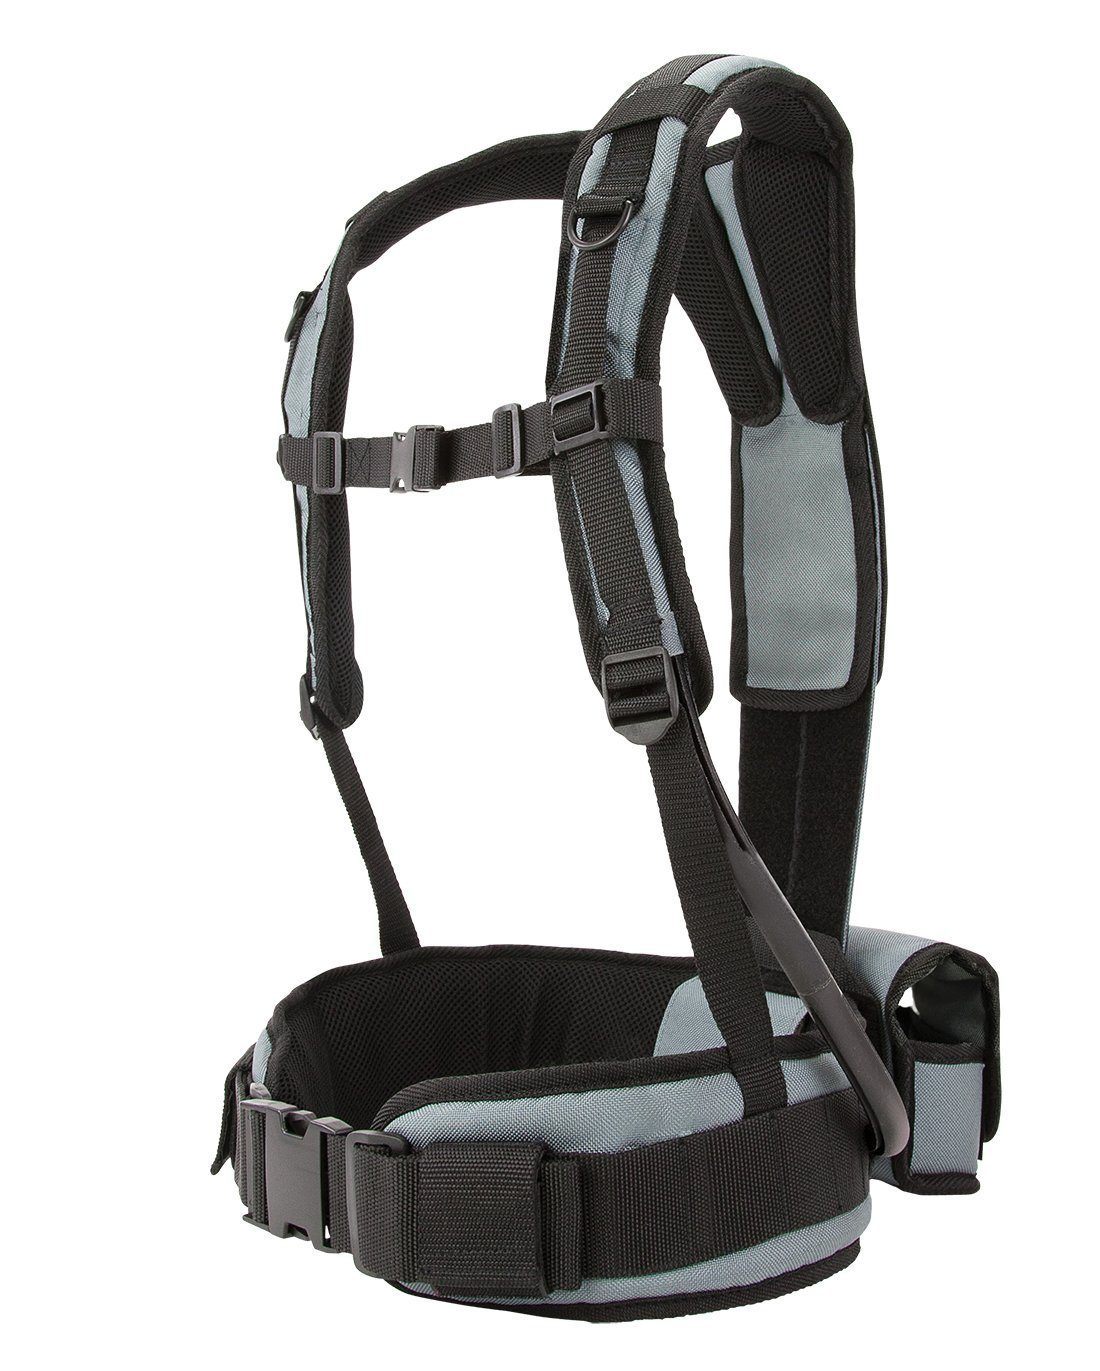 Pro Swing 45 Metal detecting harness